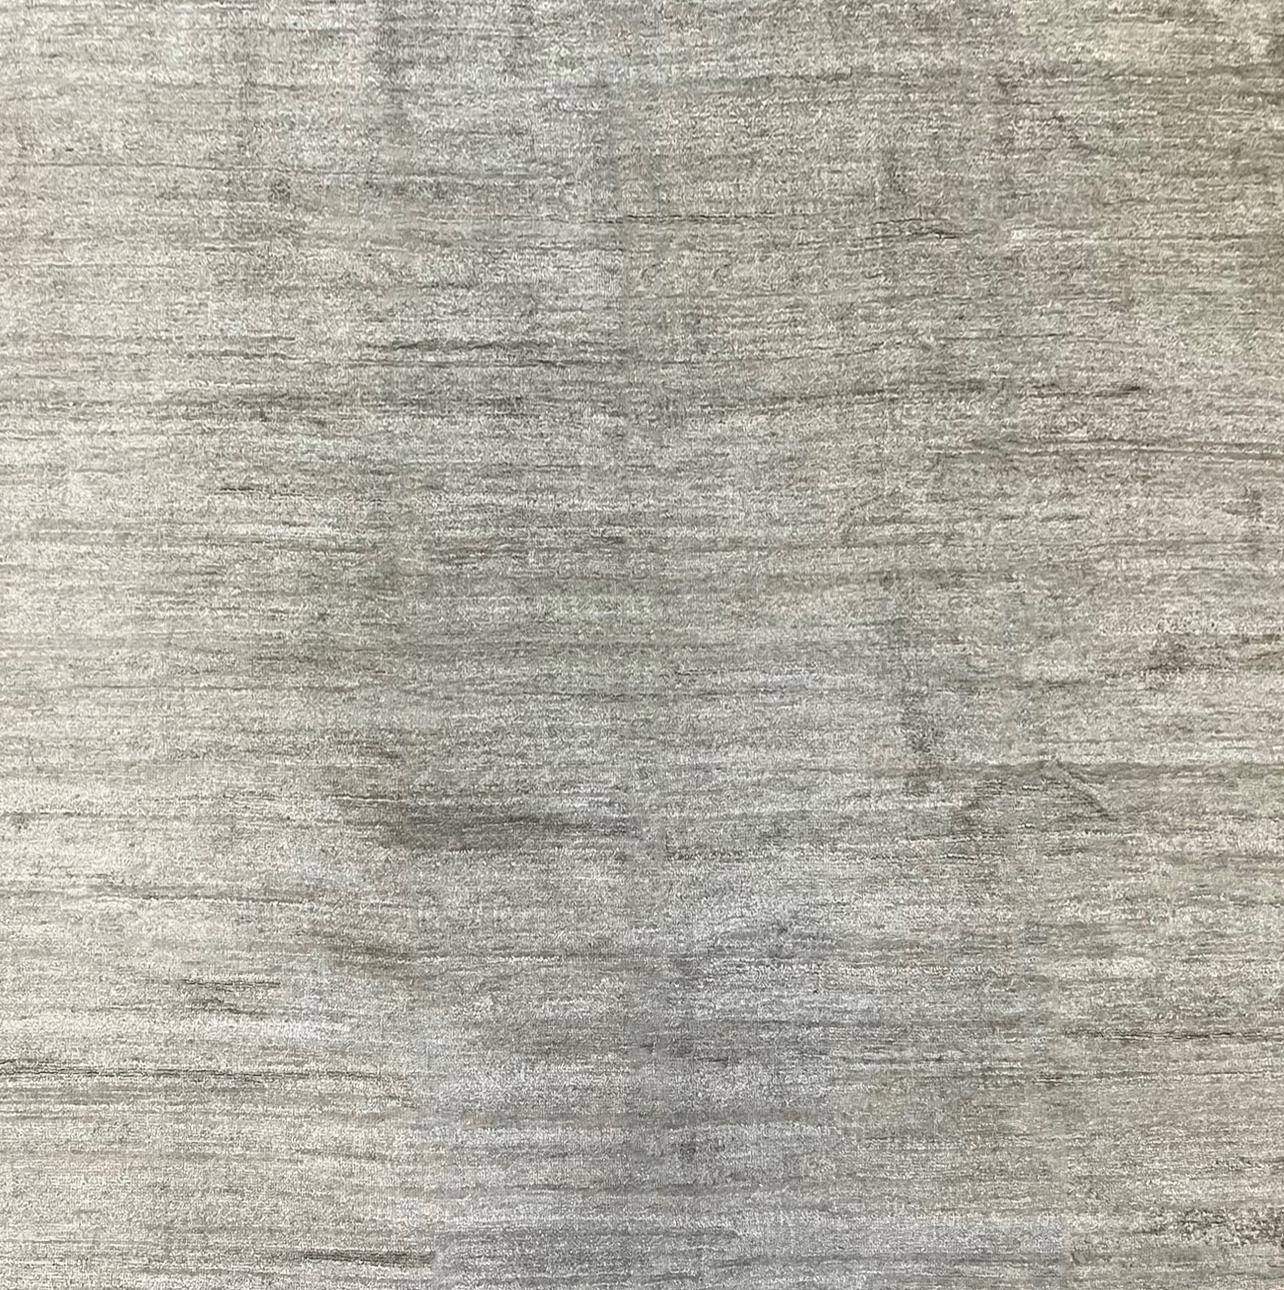 Indien Rug & Kilim's Contemporary Rug in Solid Gray and Off-White Striae (Tapis contemporain à rayures gris uni et blanc cassé) en vente